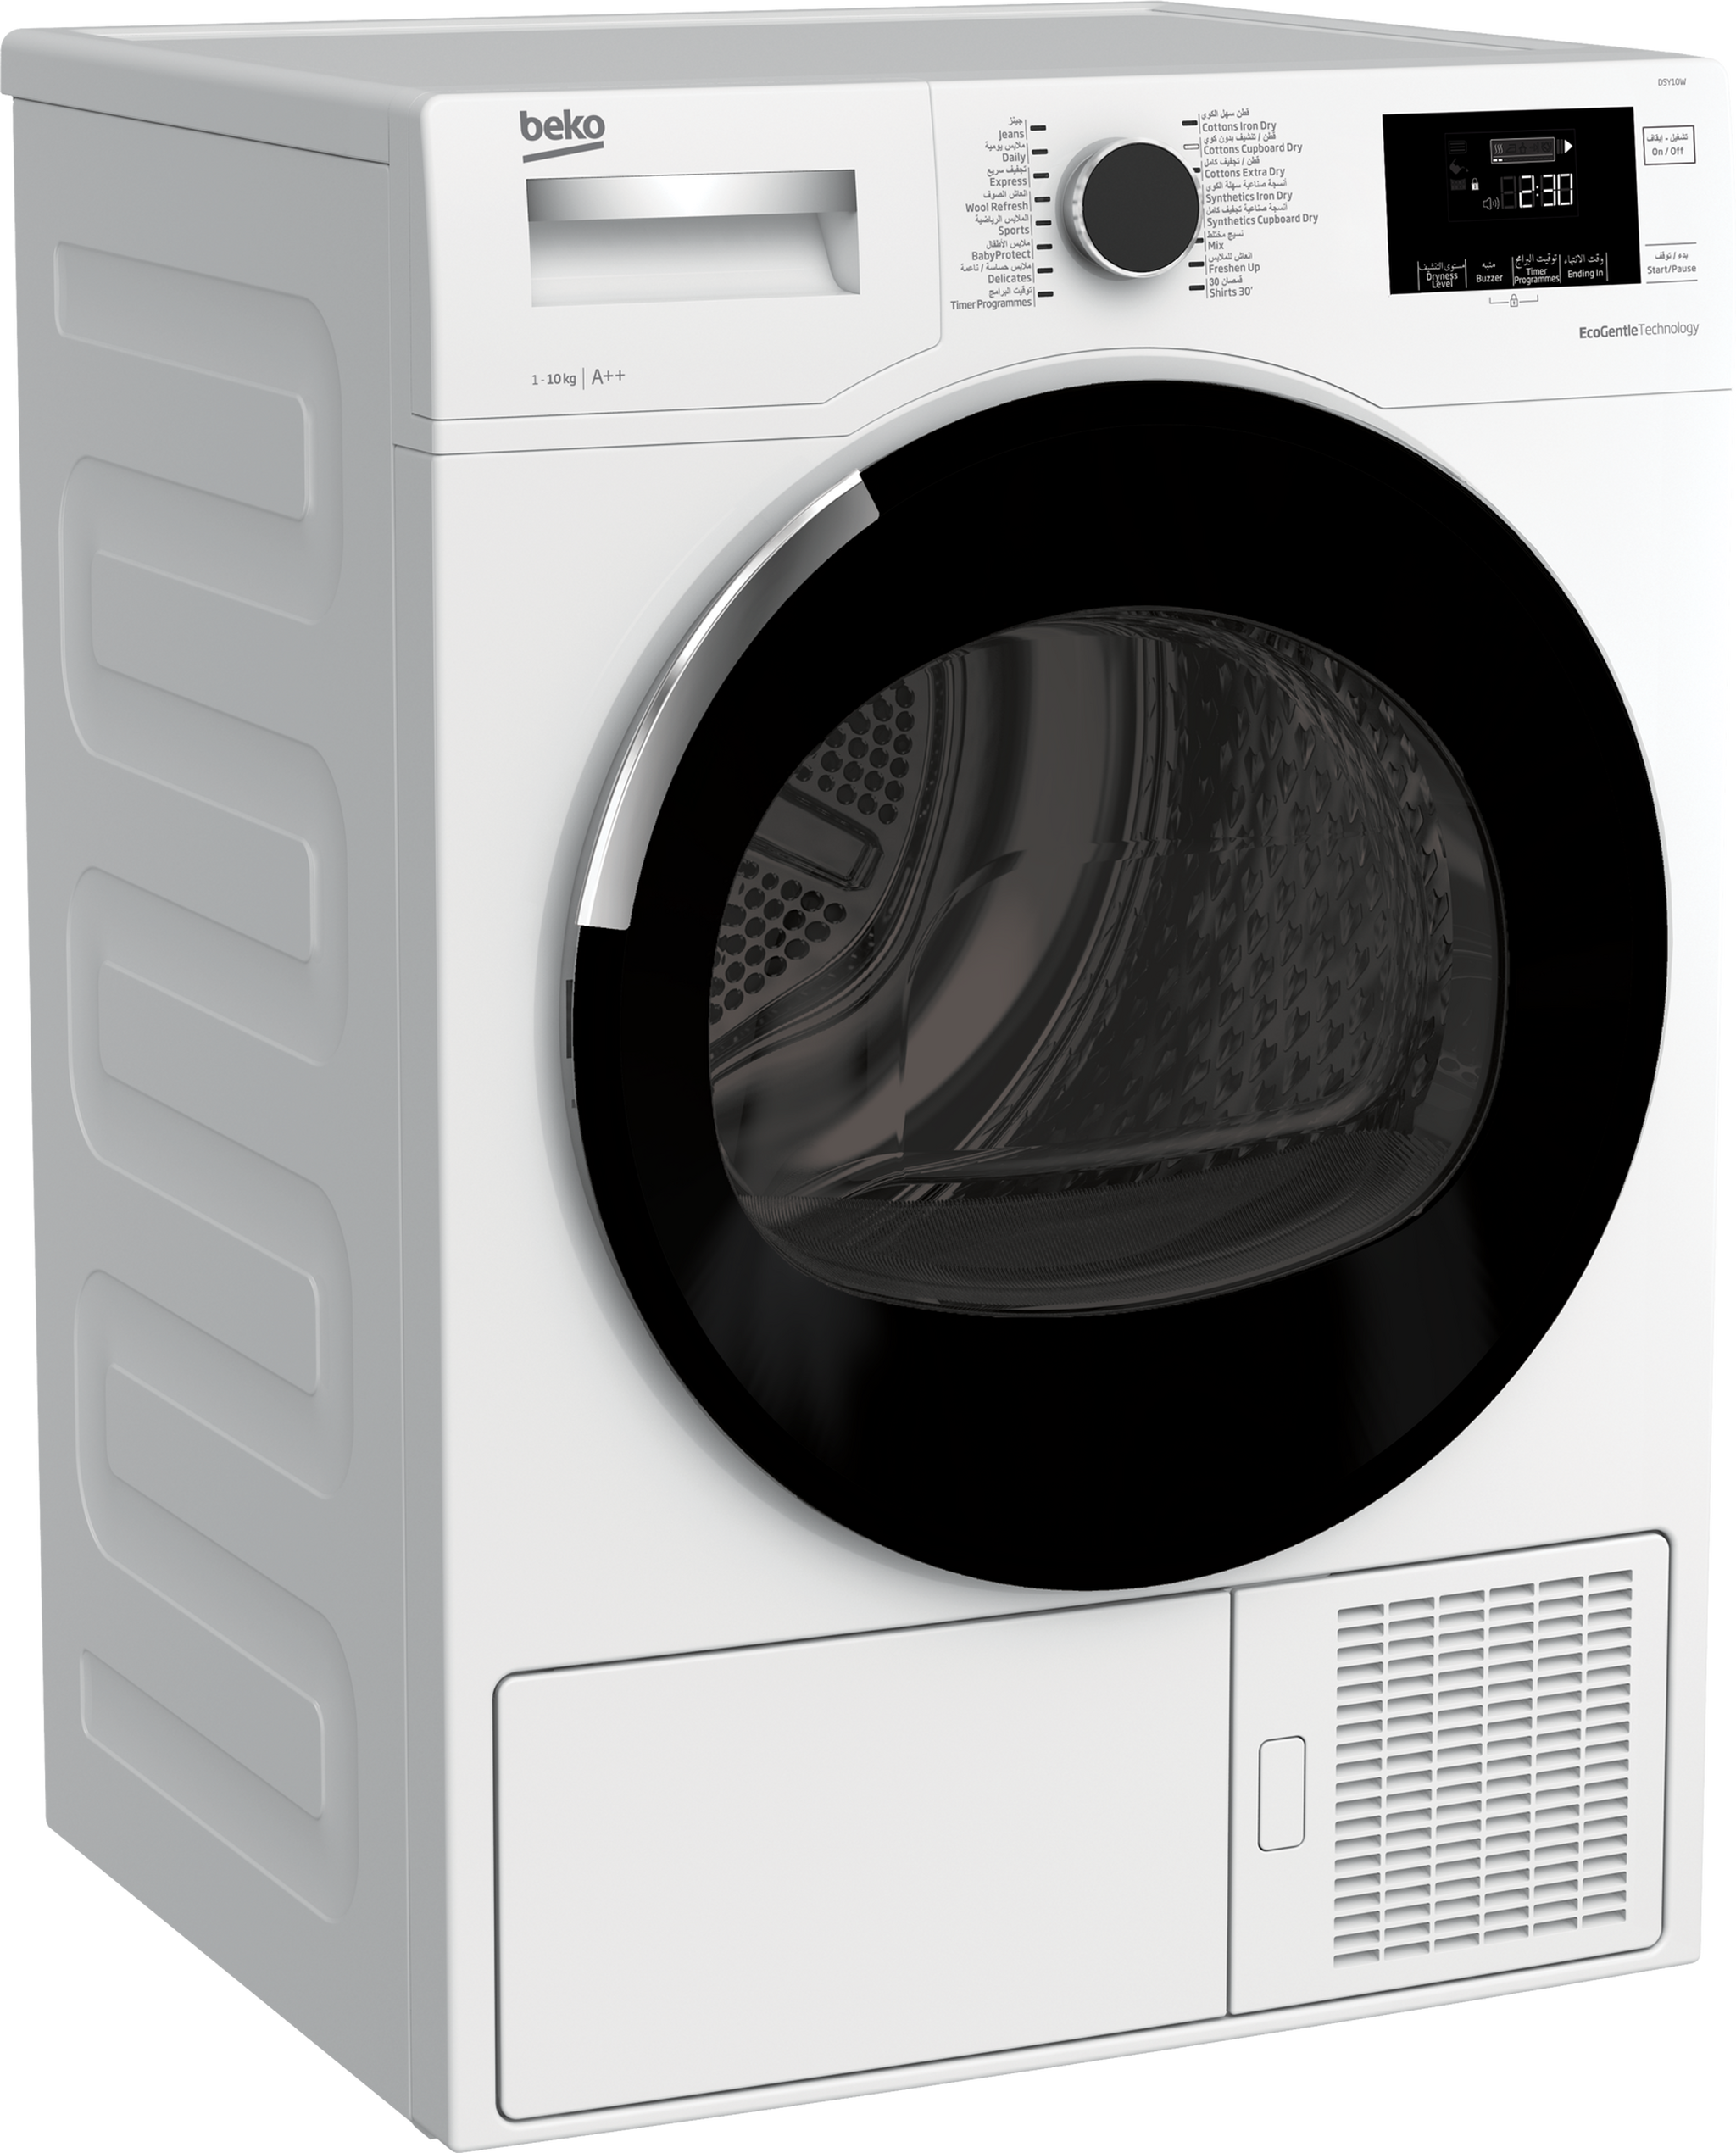 Beko 10KG Heat Pump Tumble Dryer (DSY10PB46W) - White